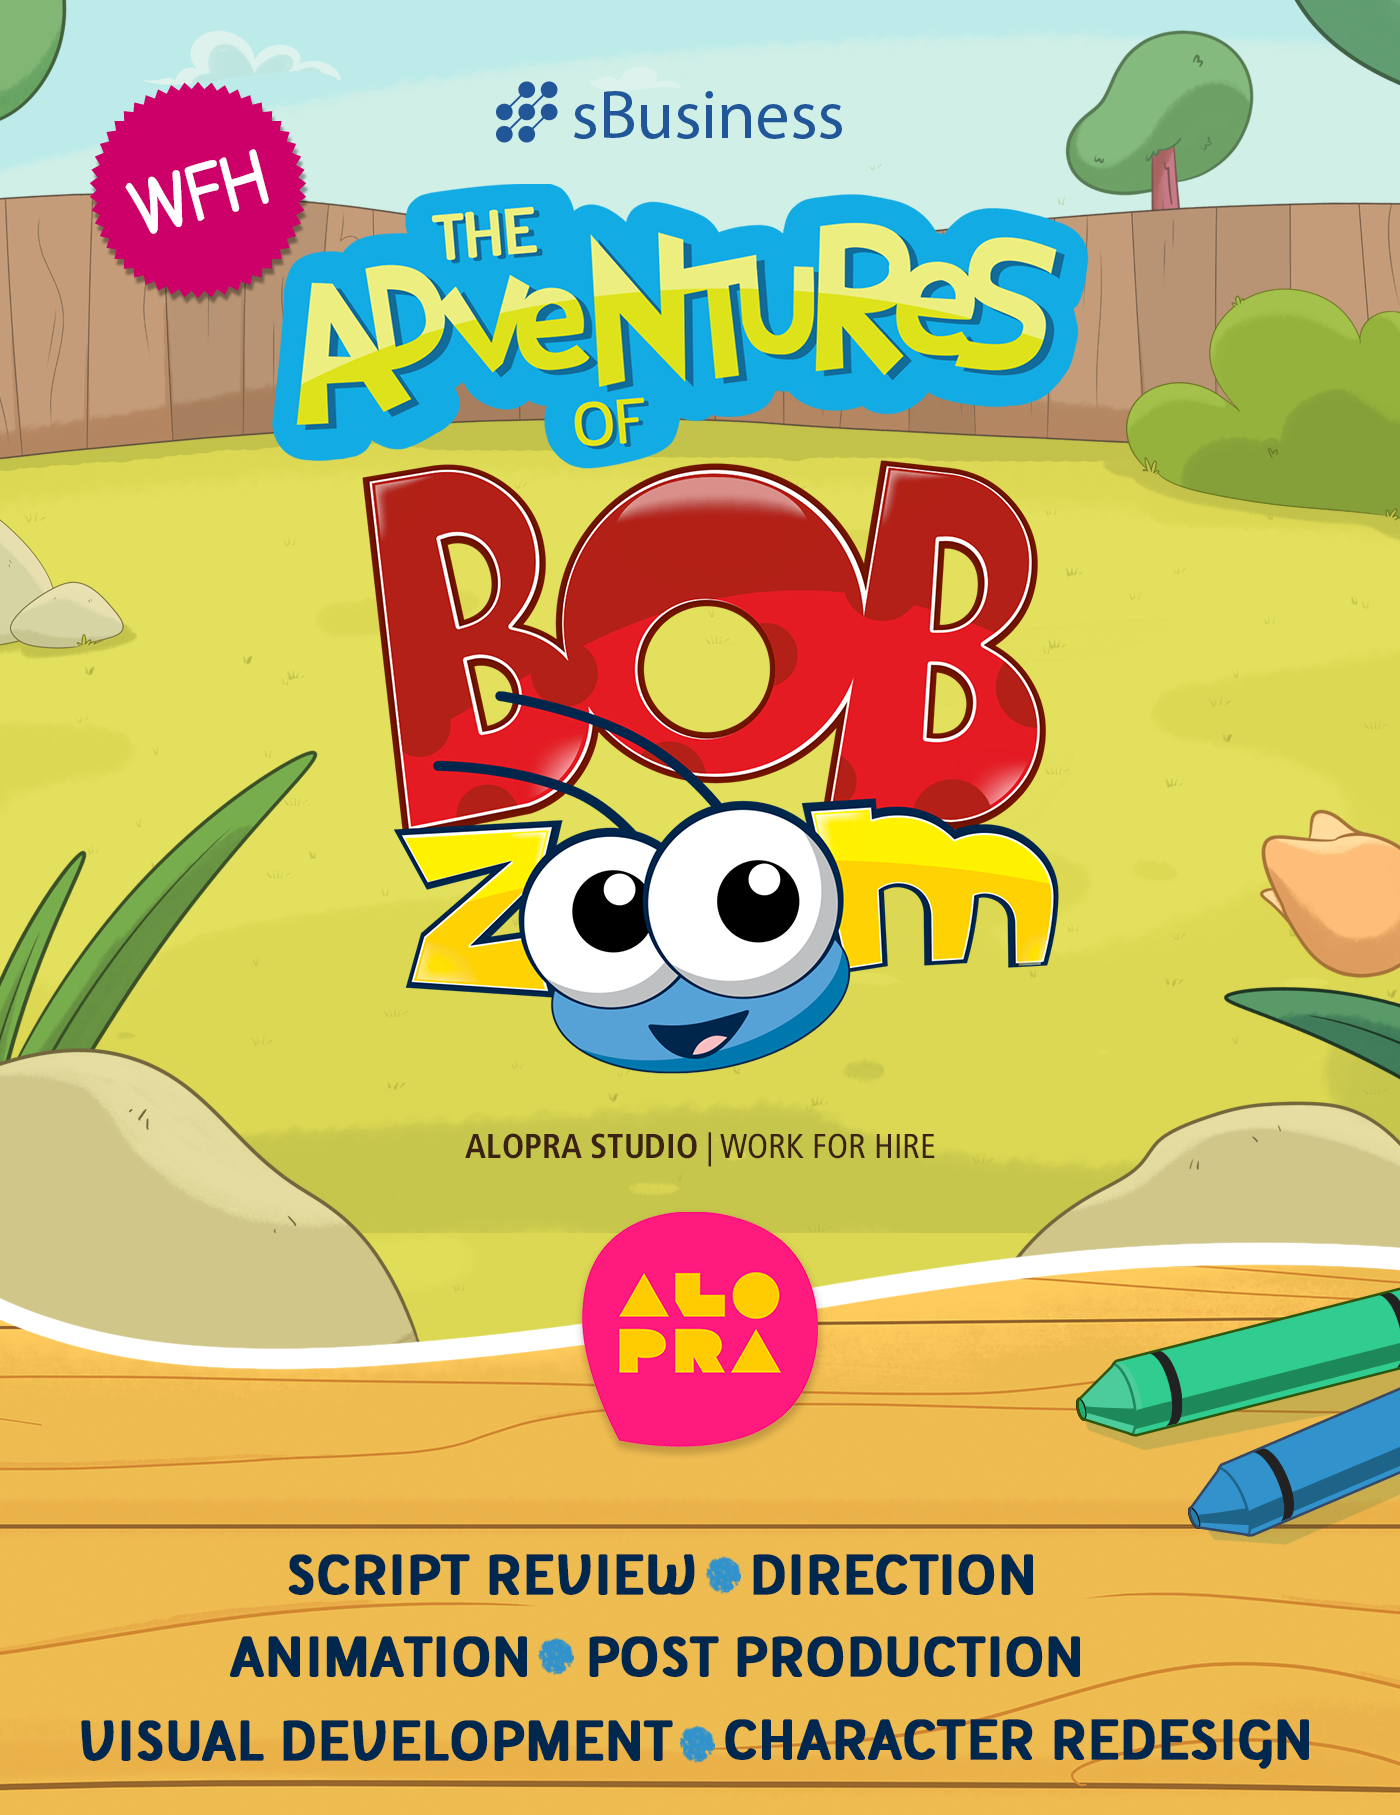 BOB ZOOM | 2D Animation on Behance